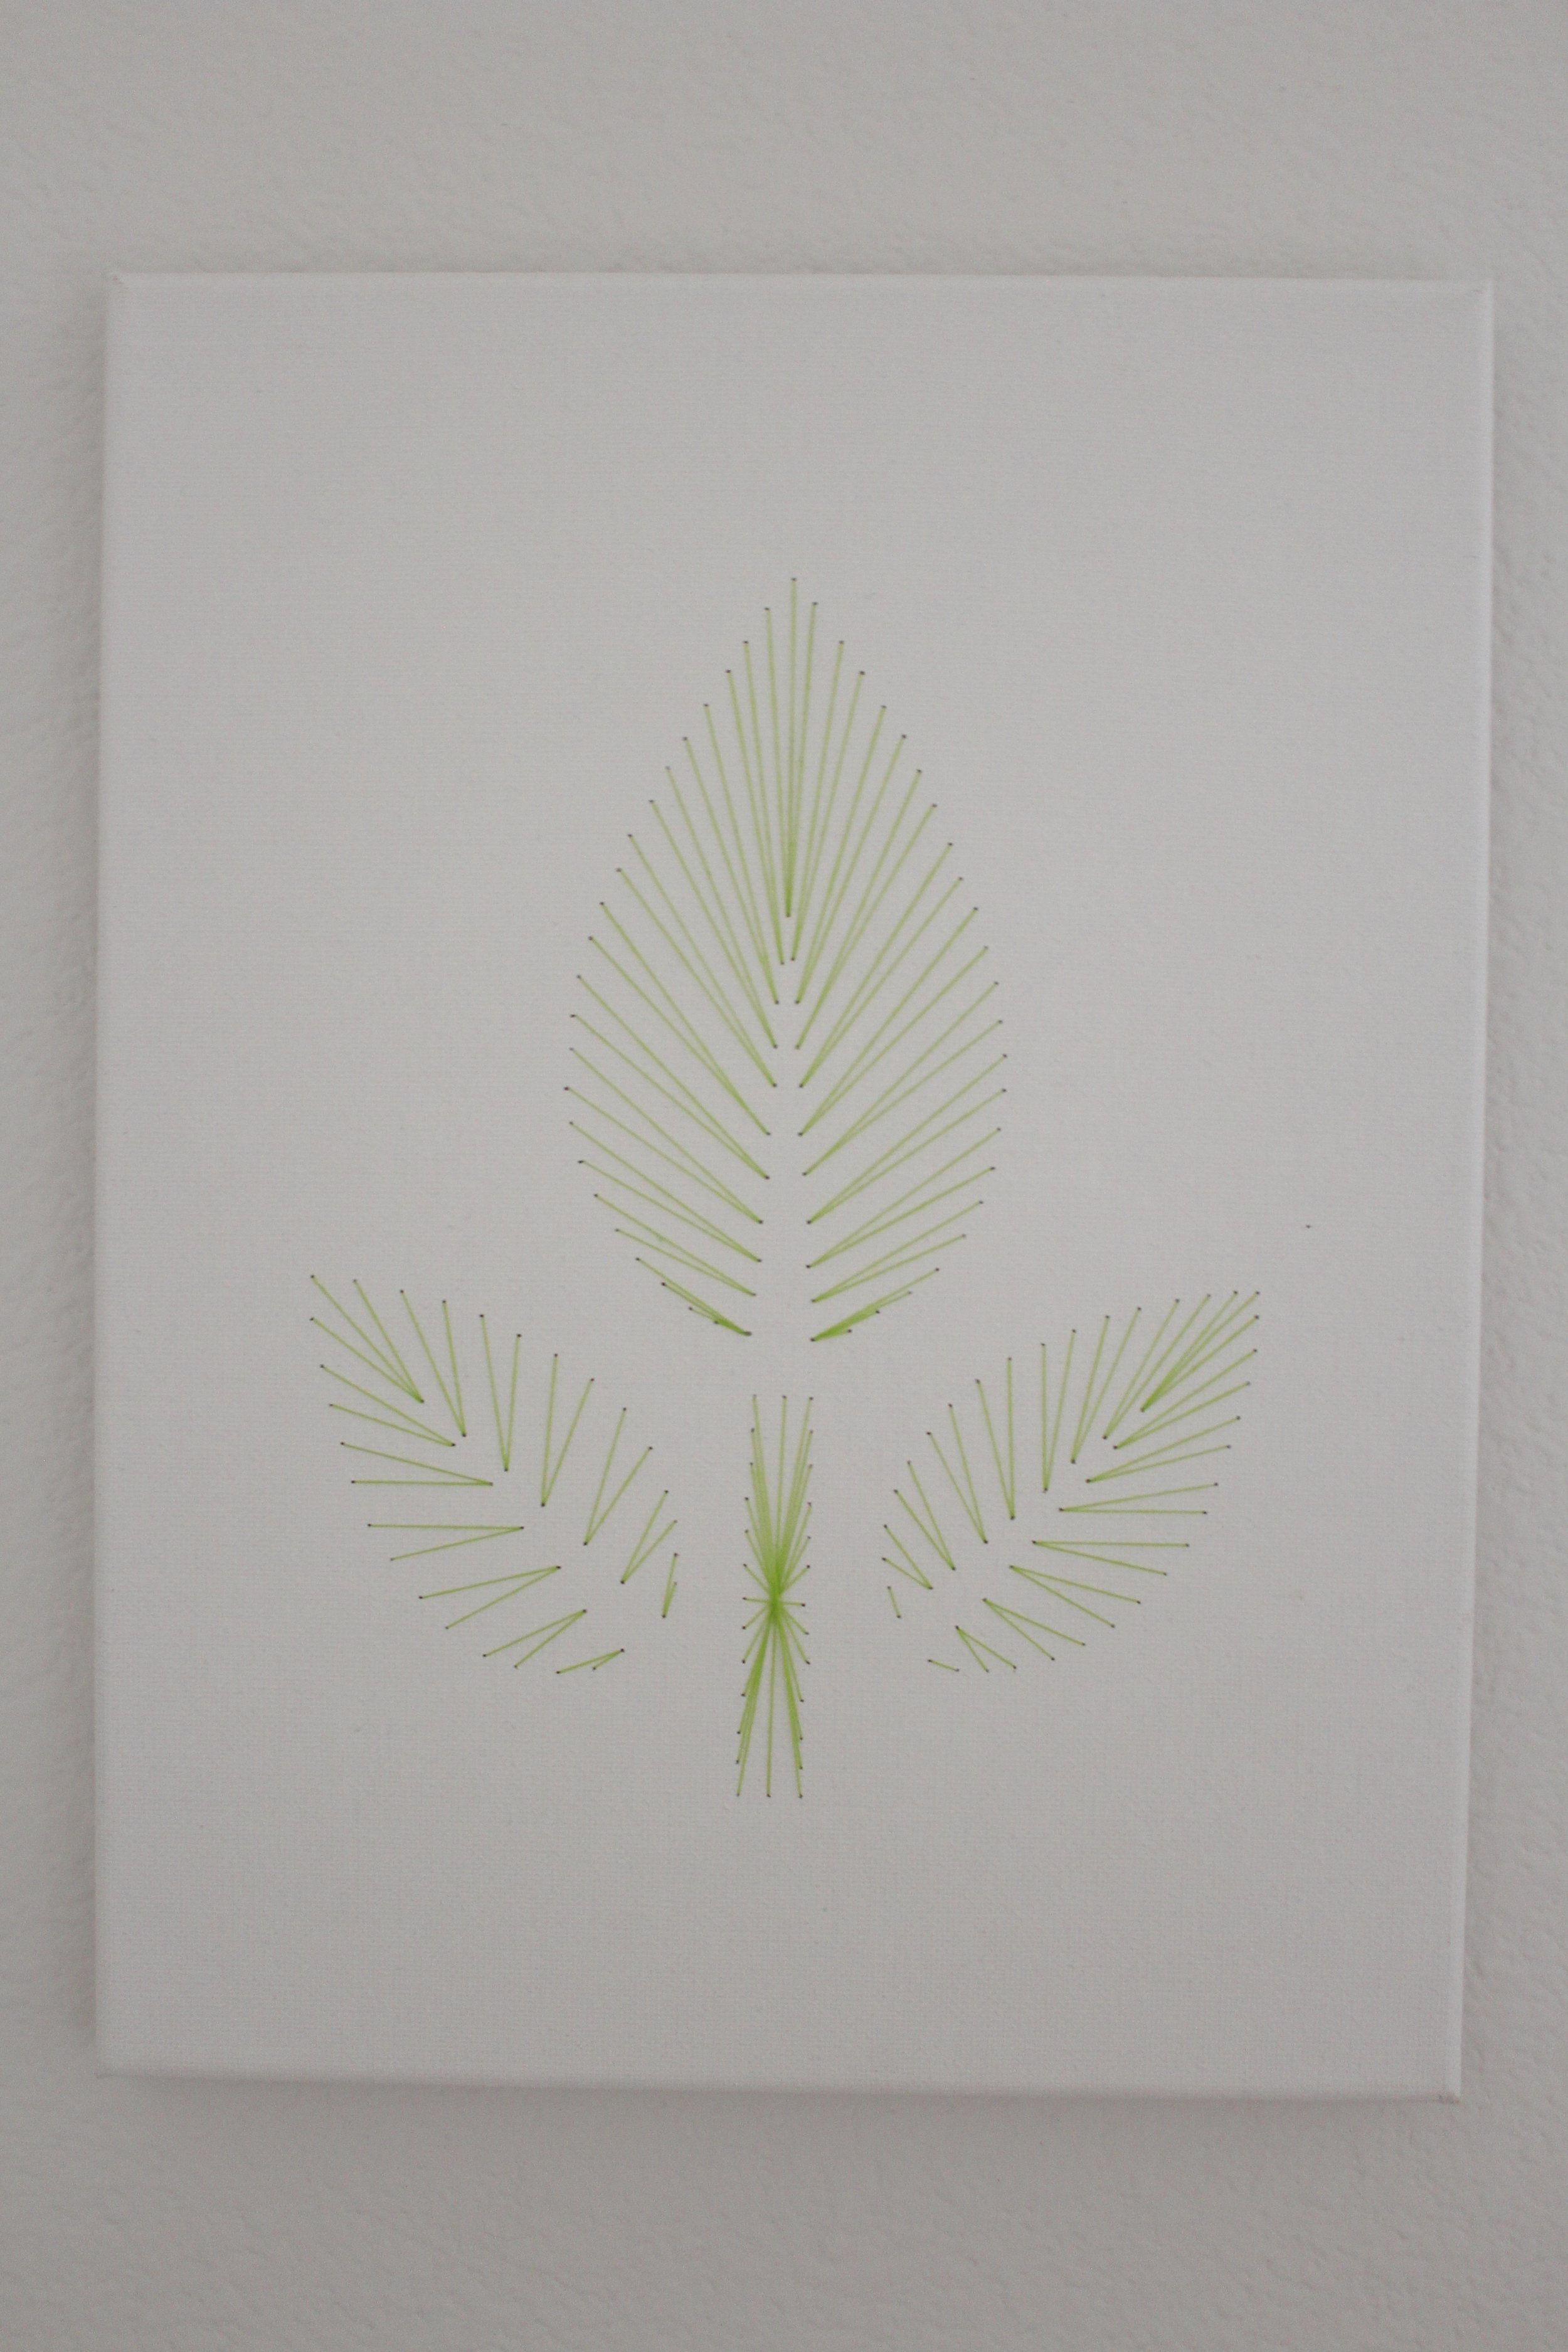  Green plant sewn into a canvas 